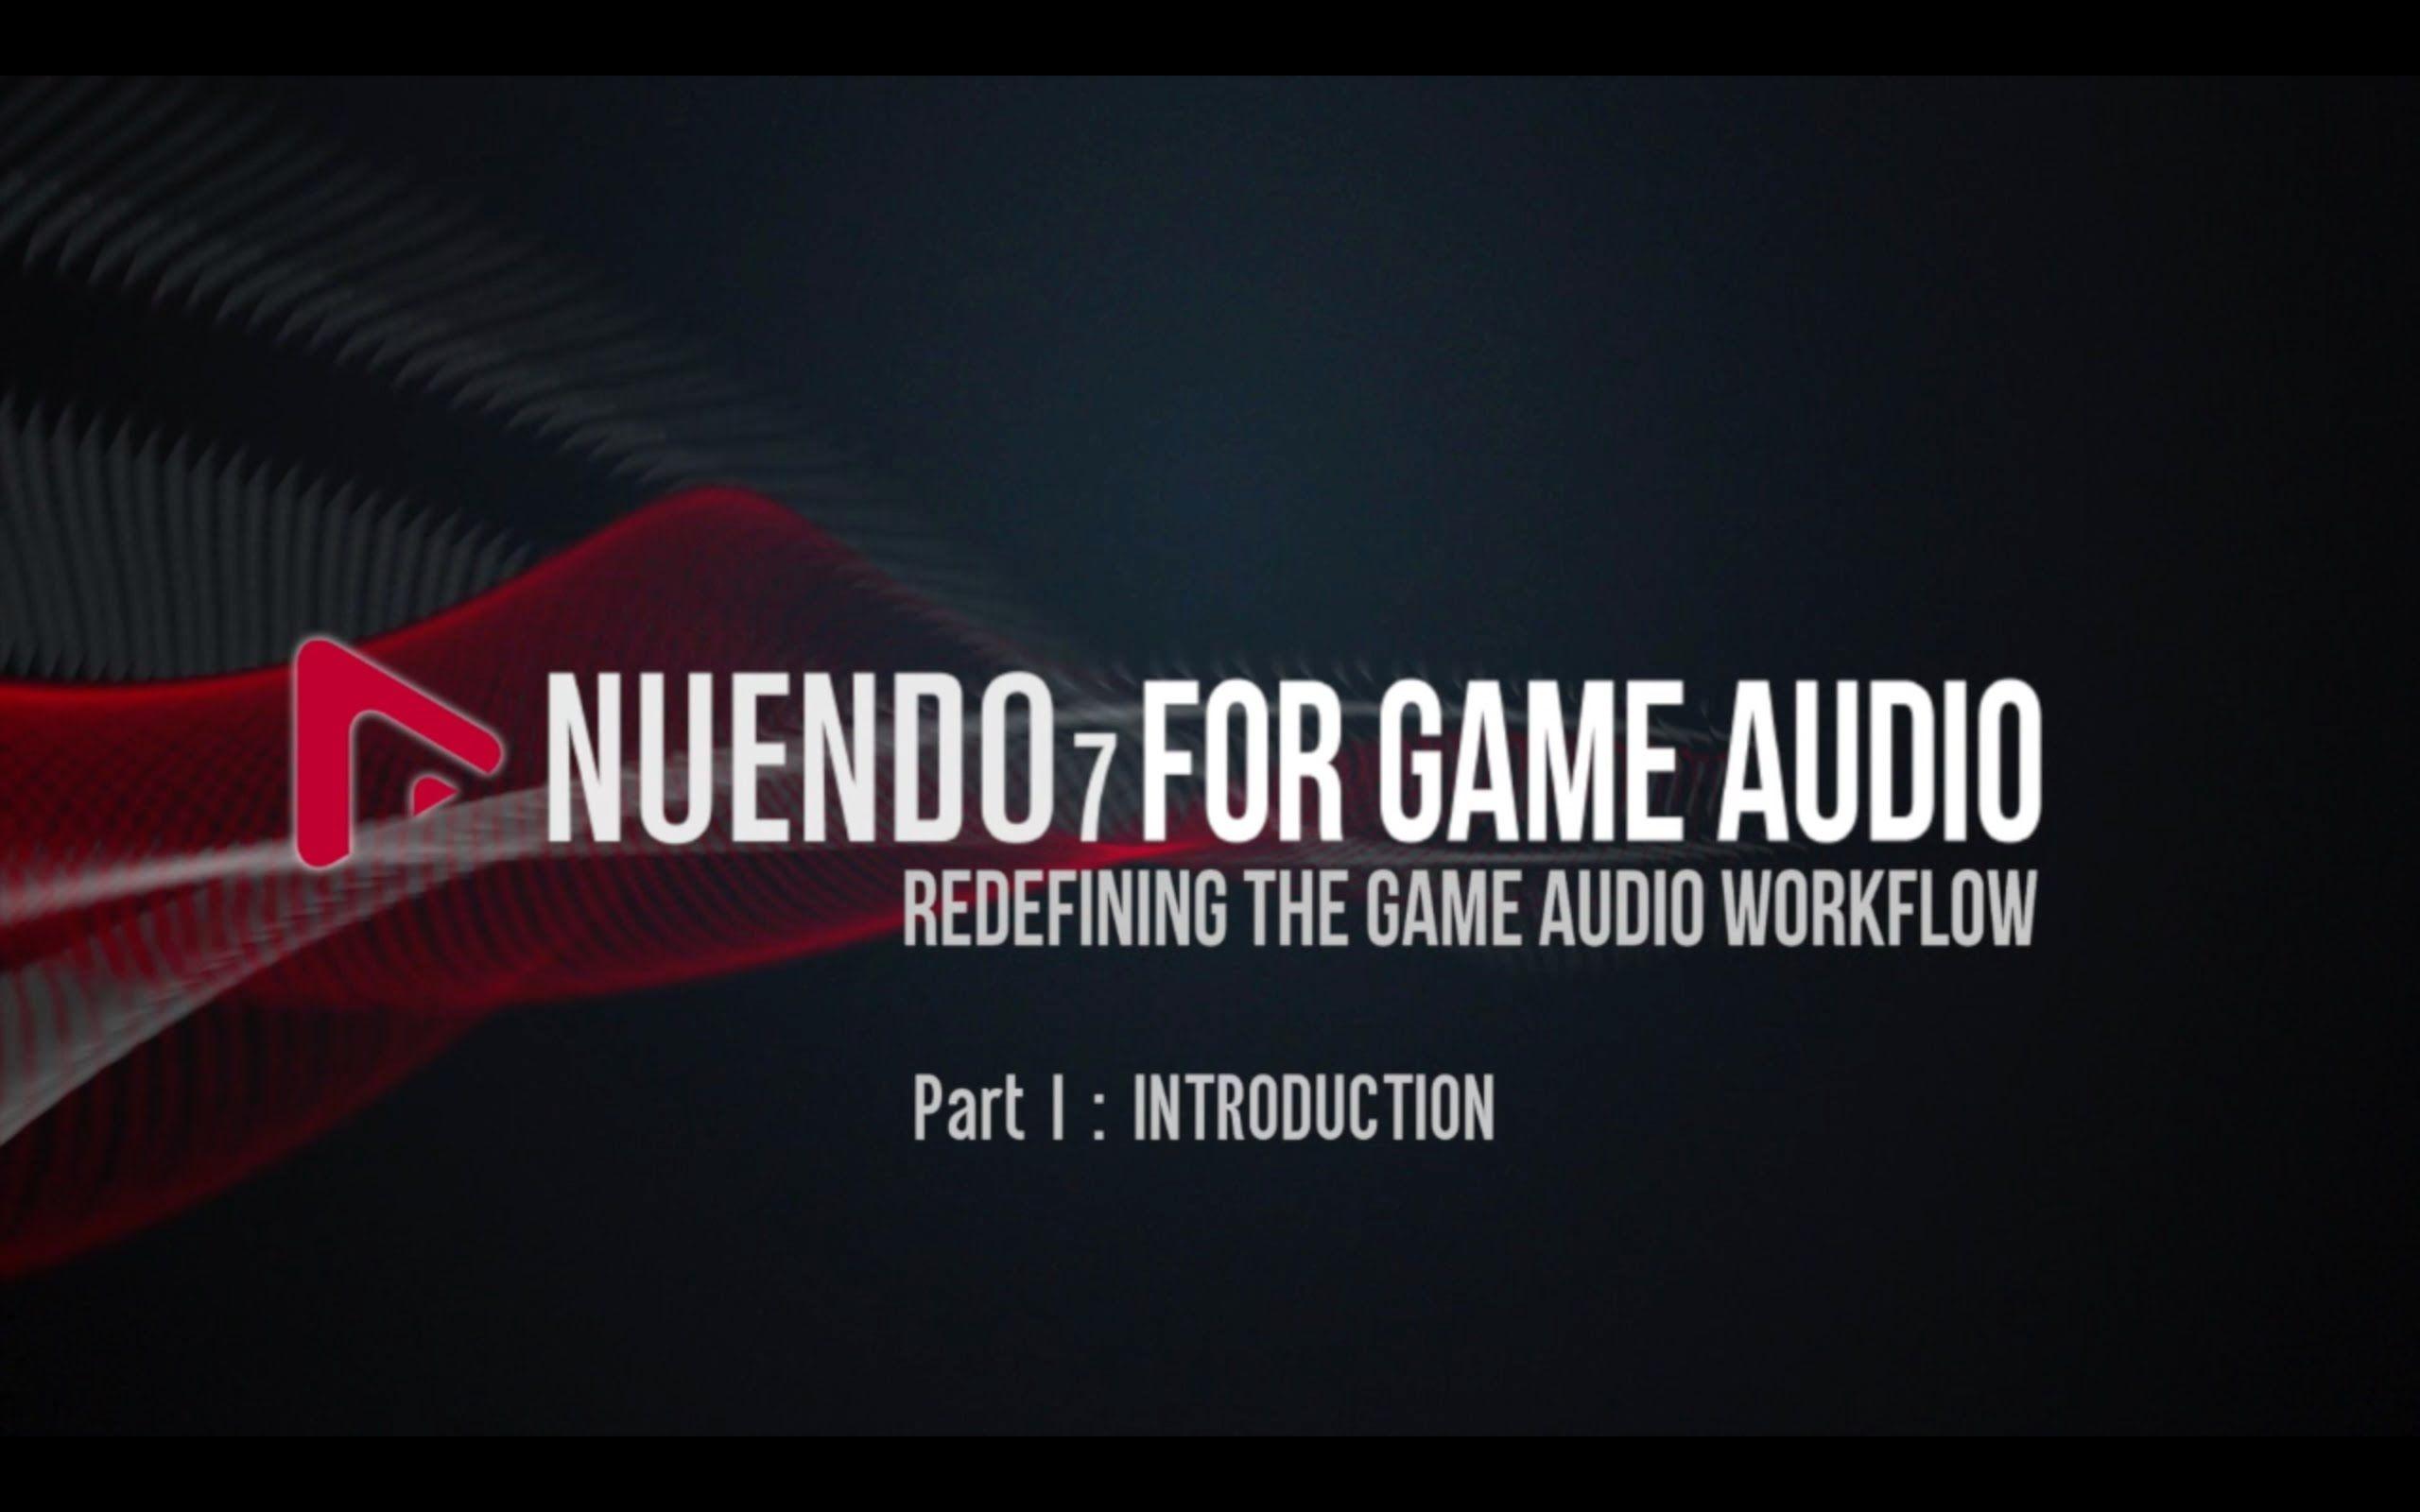 Nuendo 7 for Game Audio